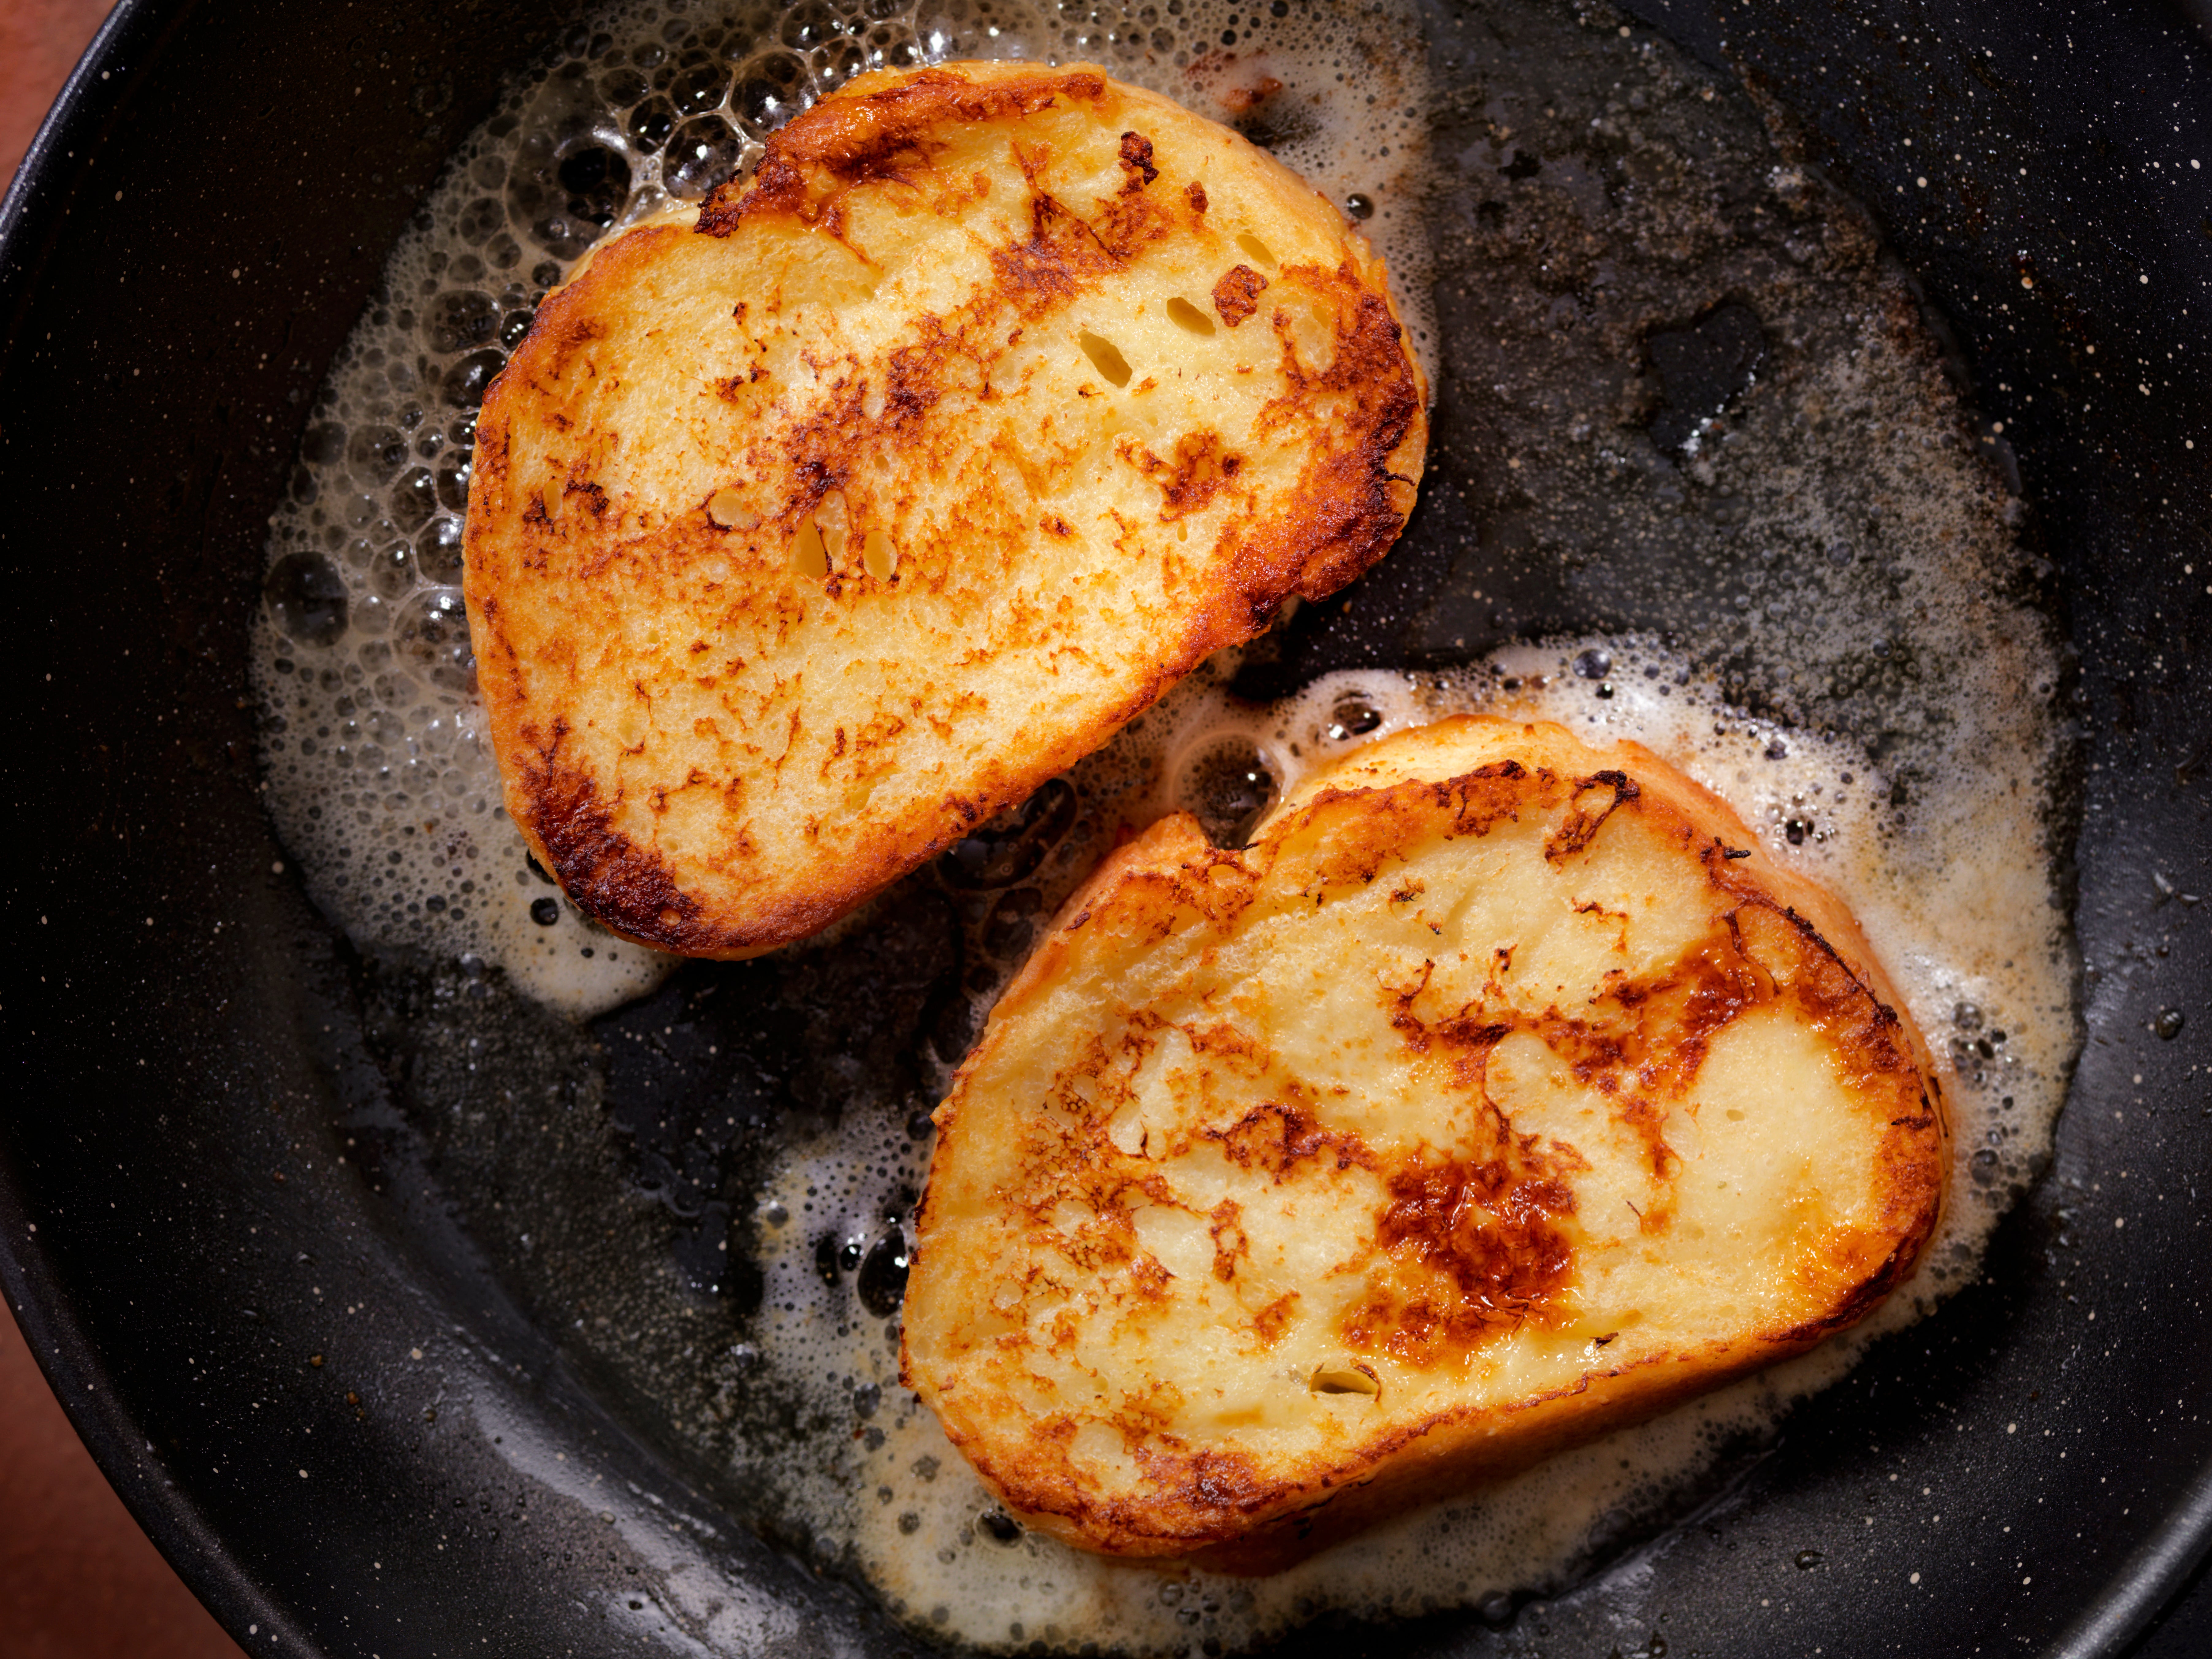 Recipe for ‘bread steak’ sparks amusement